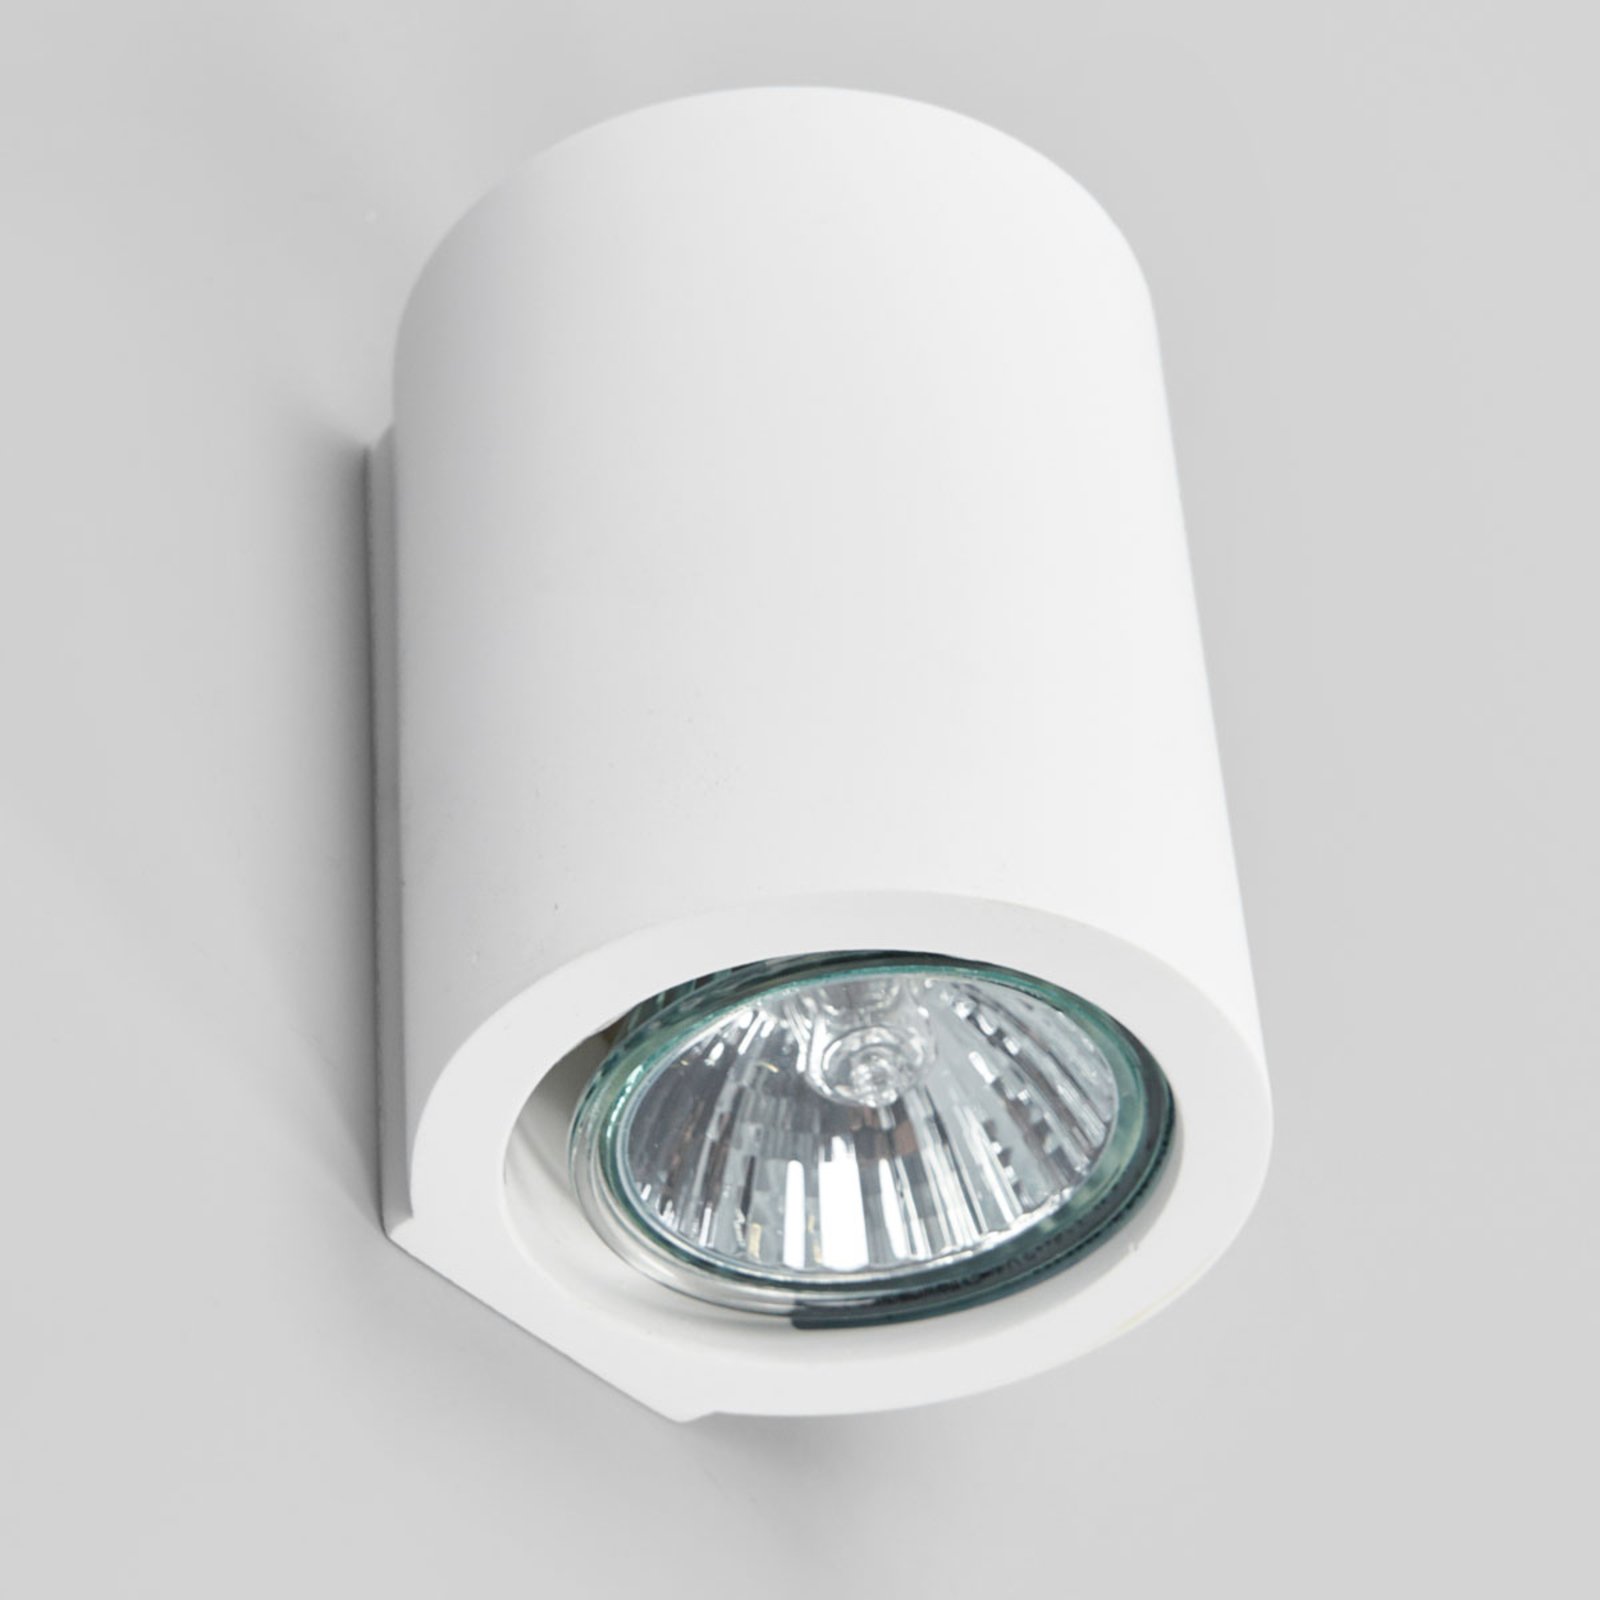 White Miroslaw GU10 wall lamp made of plaster